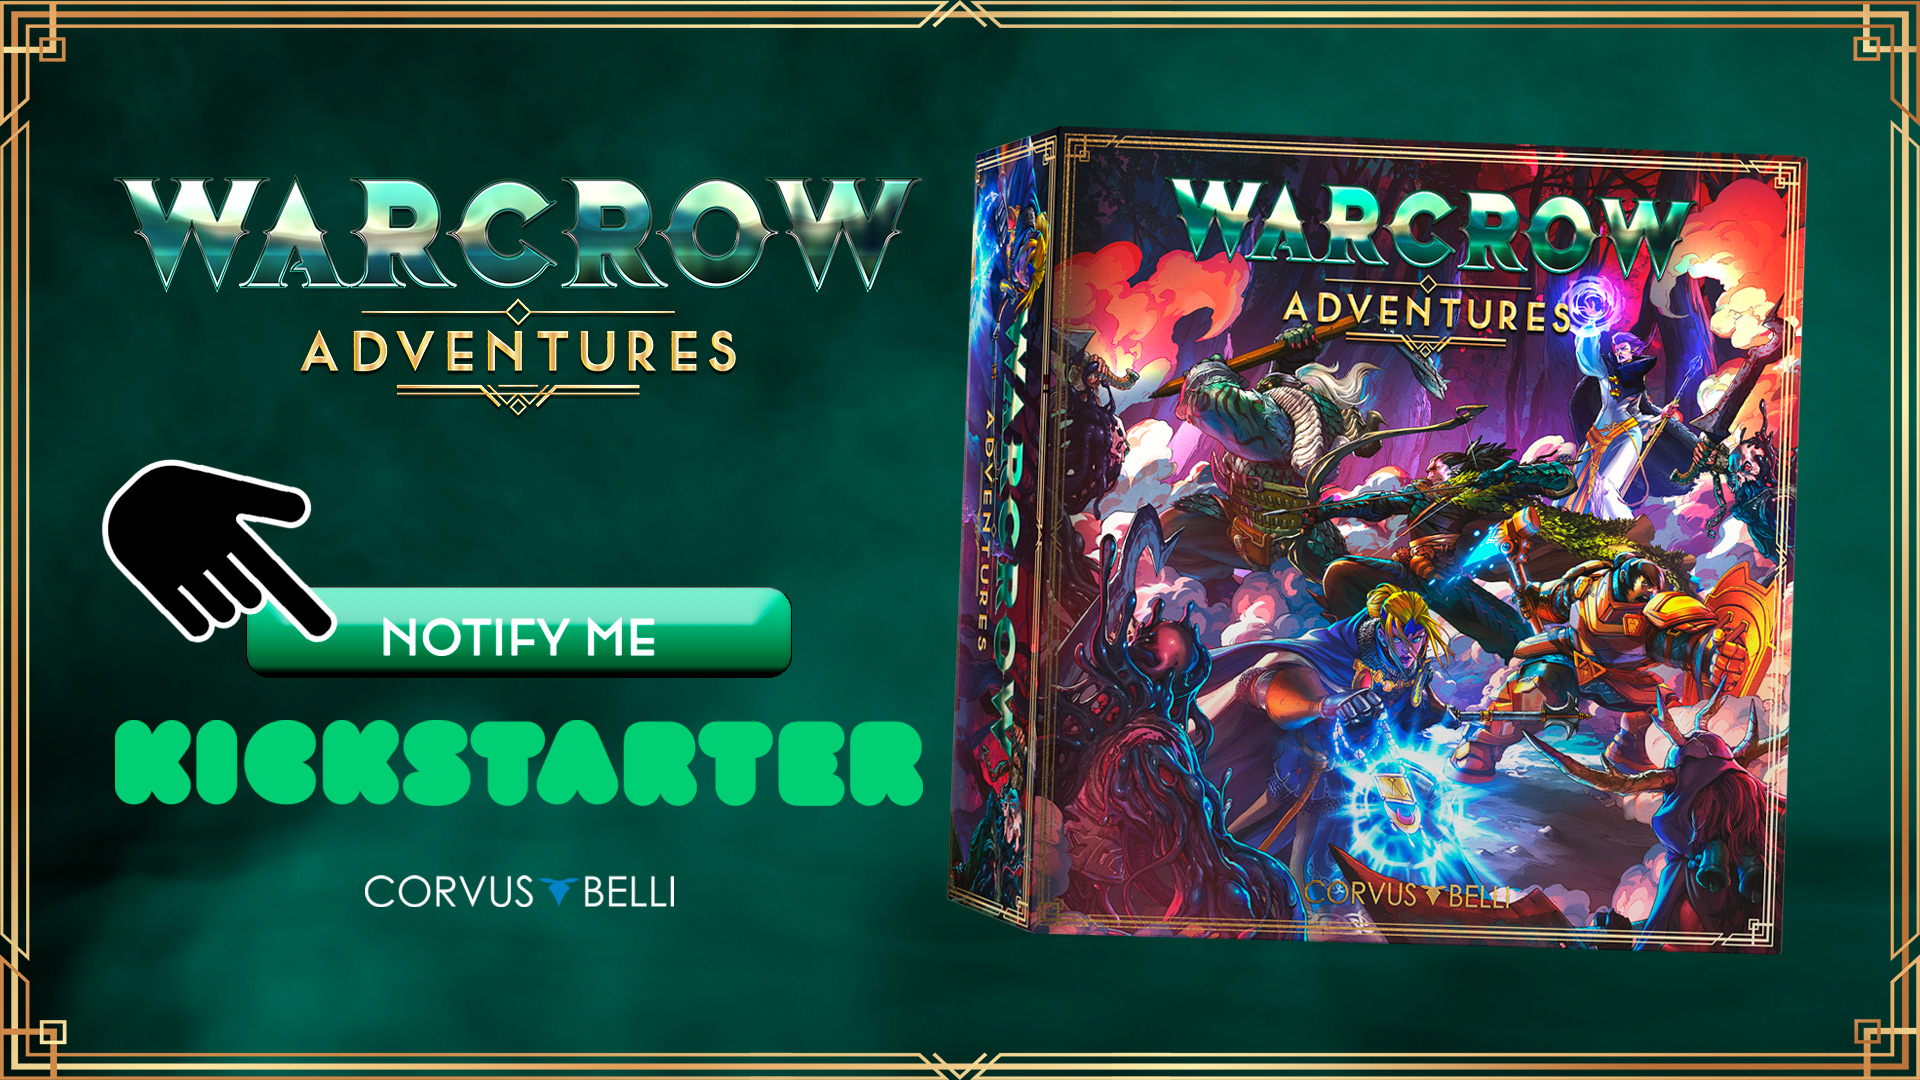 Warcrow-Adventures-Pre-Campaign-Video-coverimage